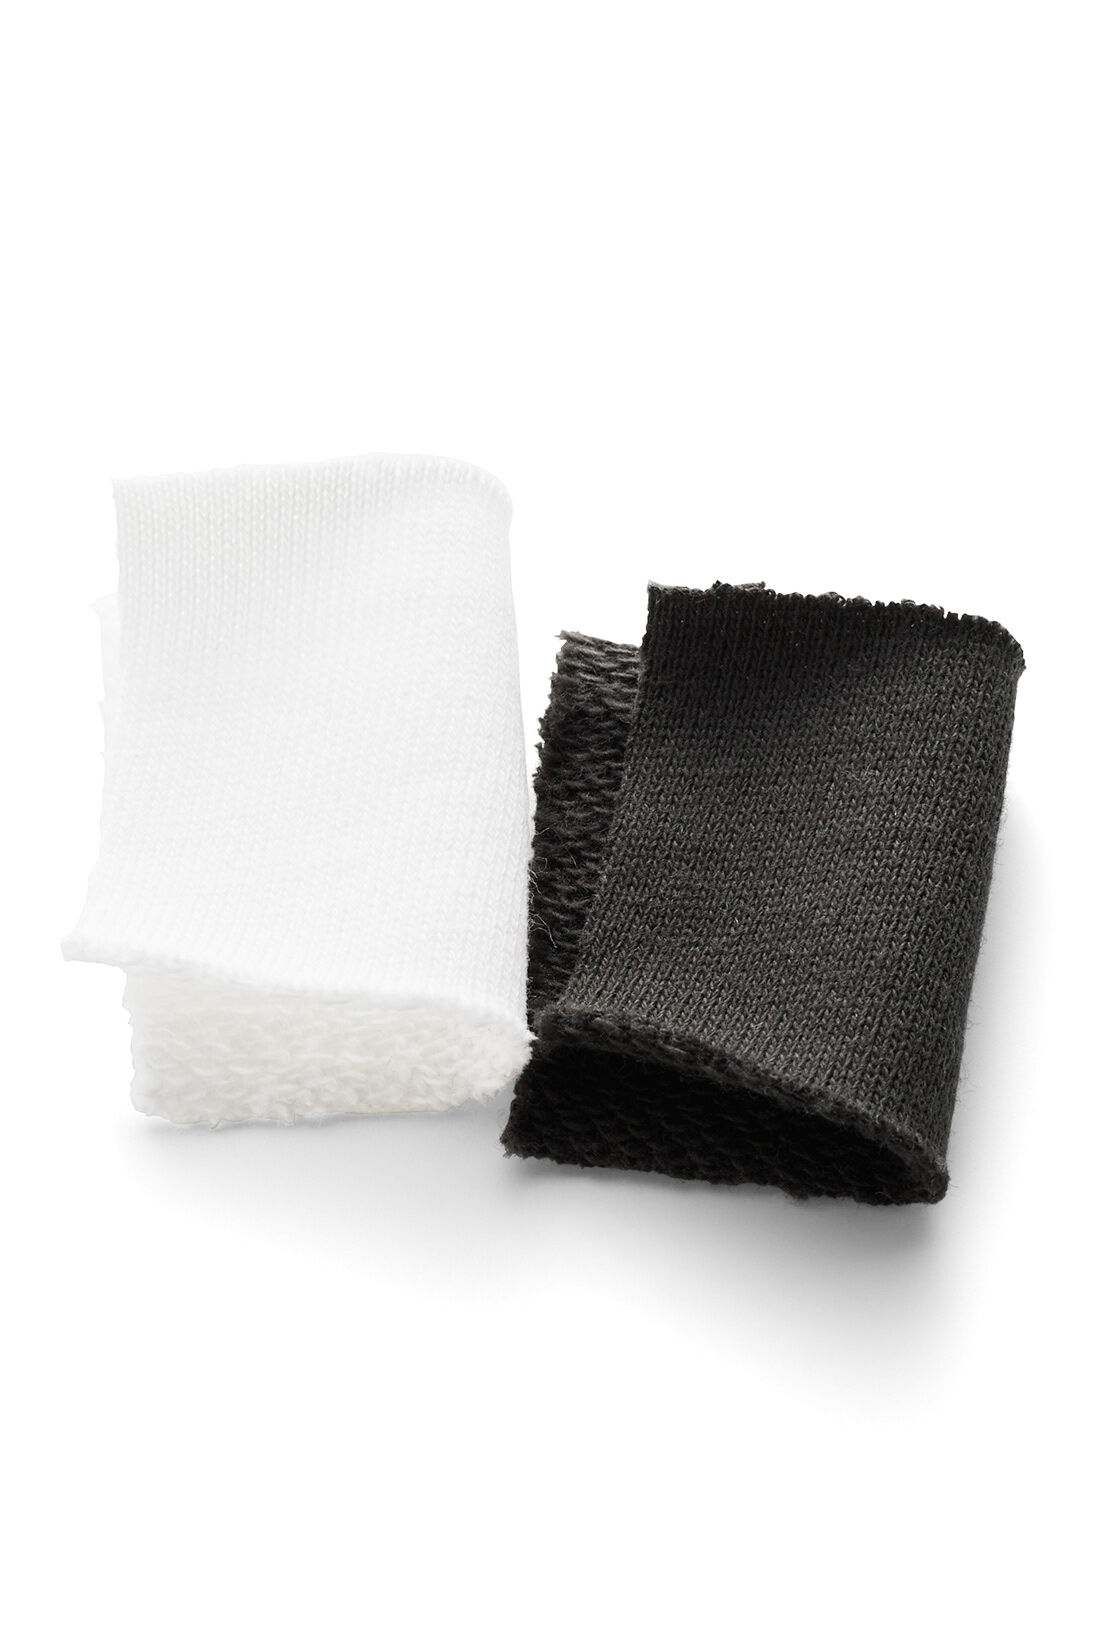 MEDE19F|MEDE19F　コードリボンスウェットフーディー〈オフホワイト〉|ガンガン洗えるやわらかな綿100％のミニ裏毛素材。